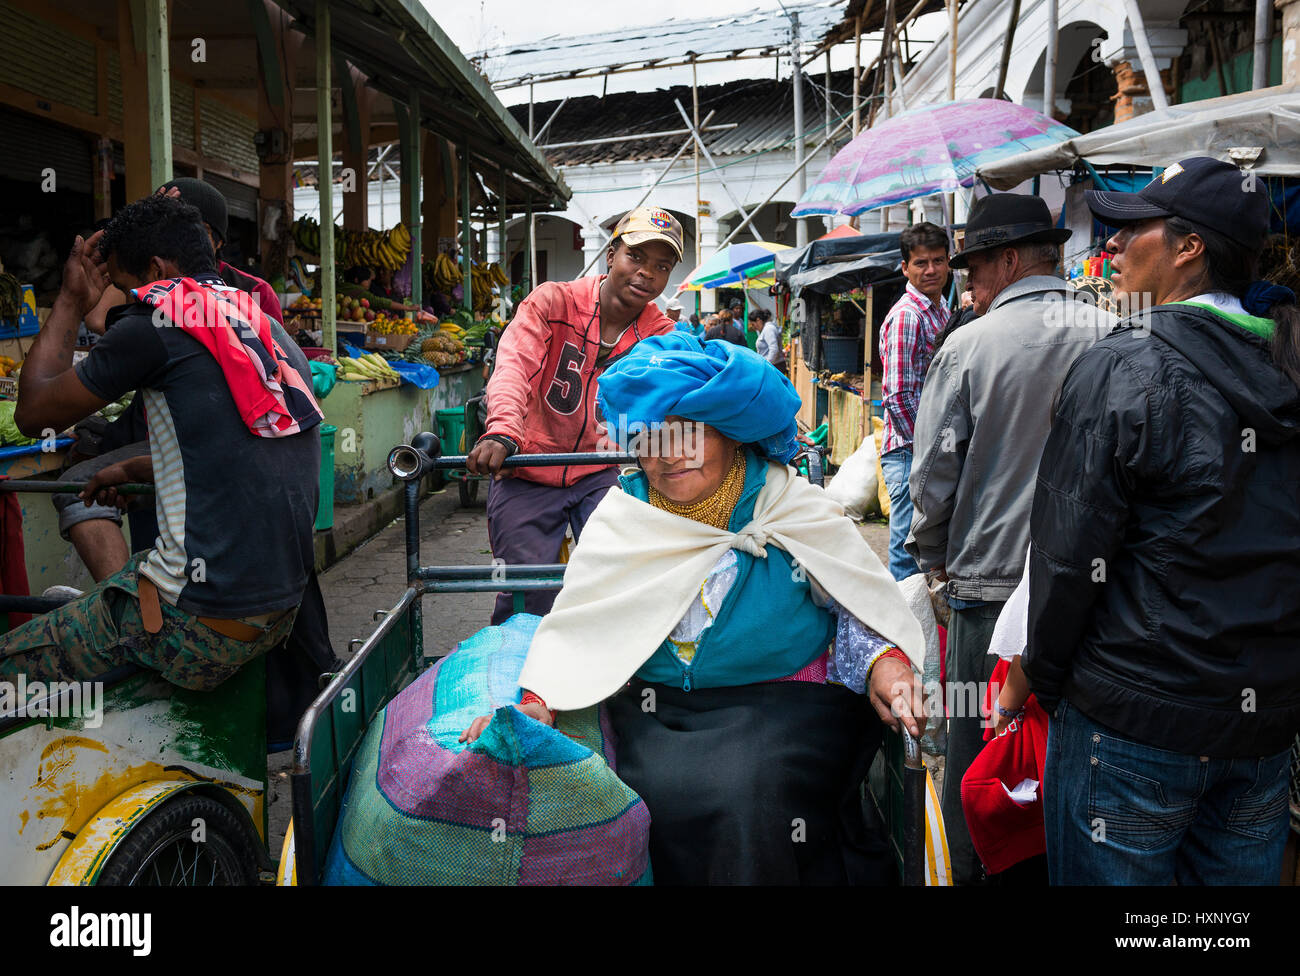 Otavalo, Ecuador - February 1, 2014: People in a market in the town of Otavalo in Ecuador. Stock Photo